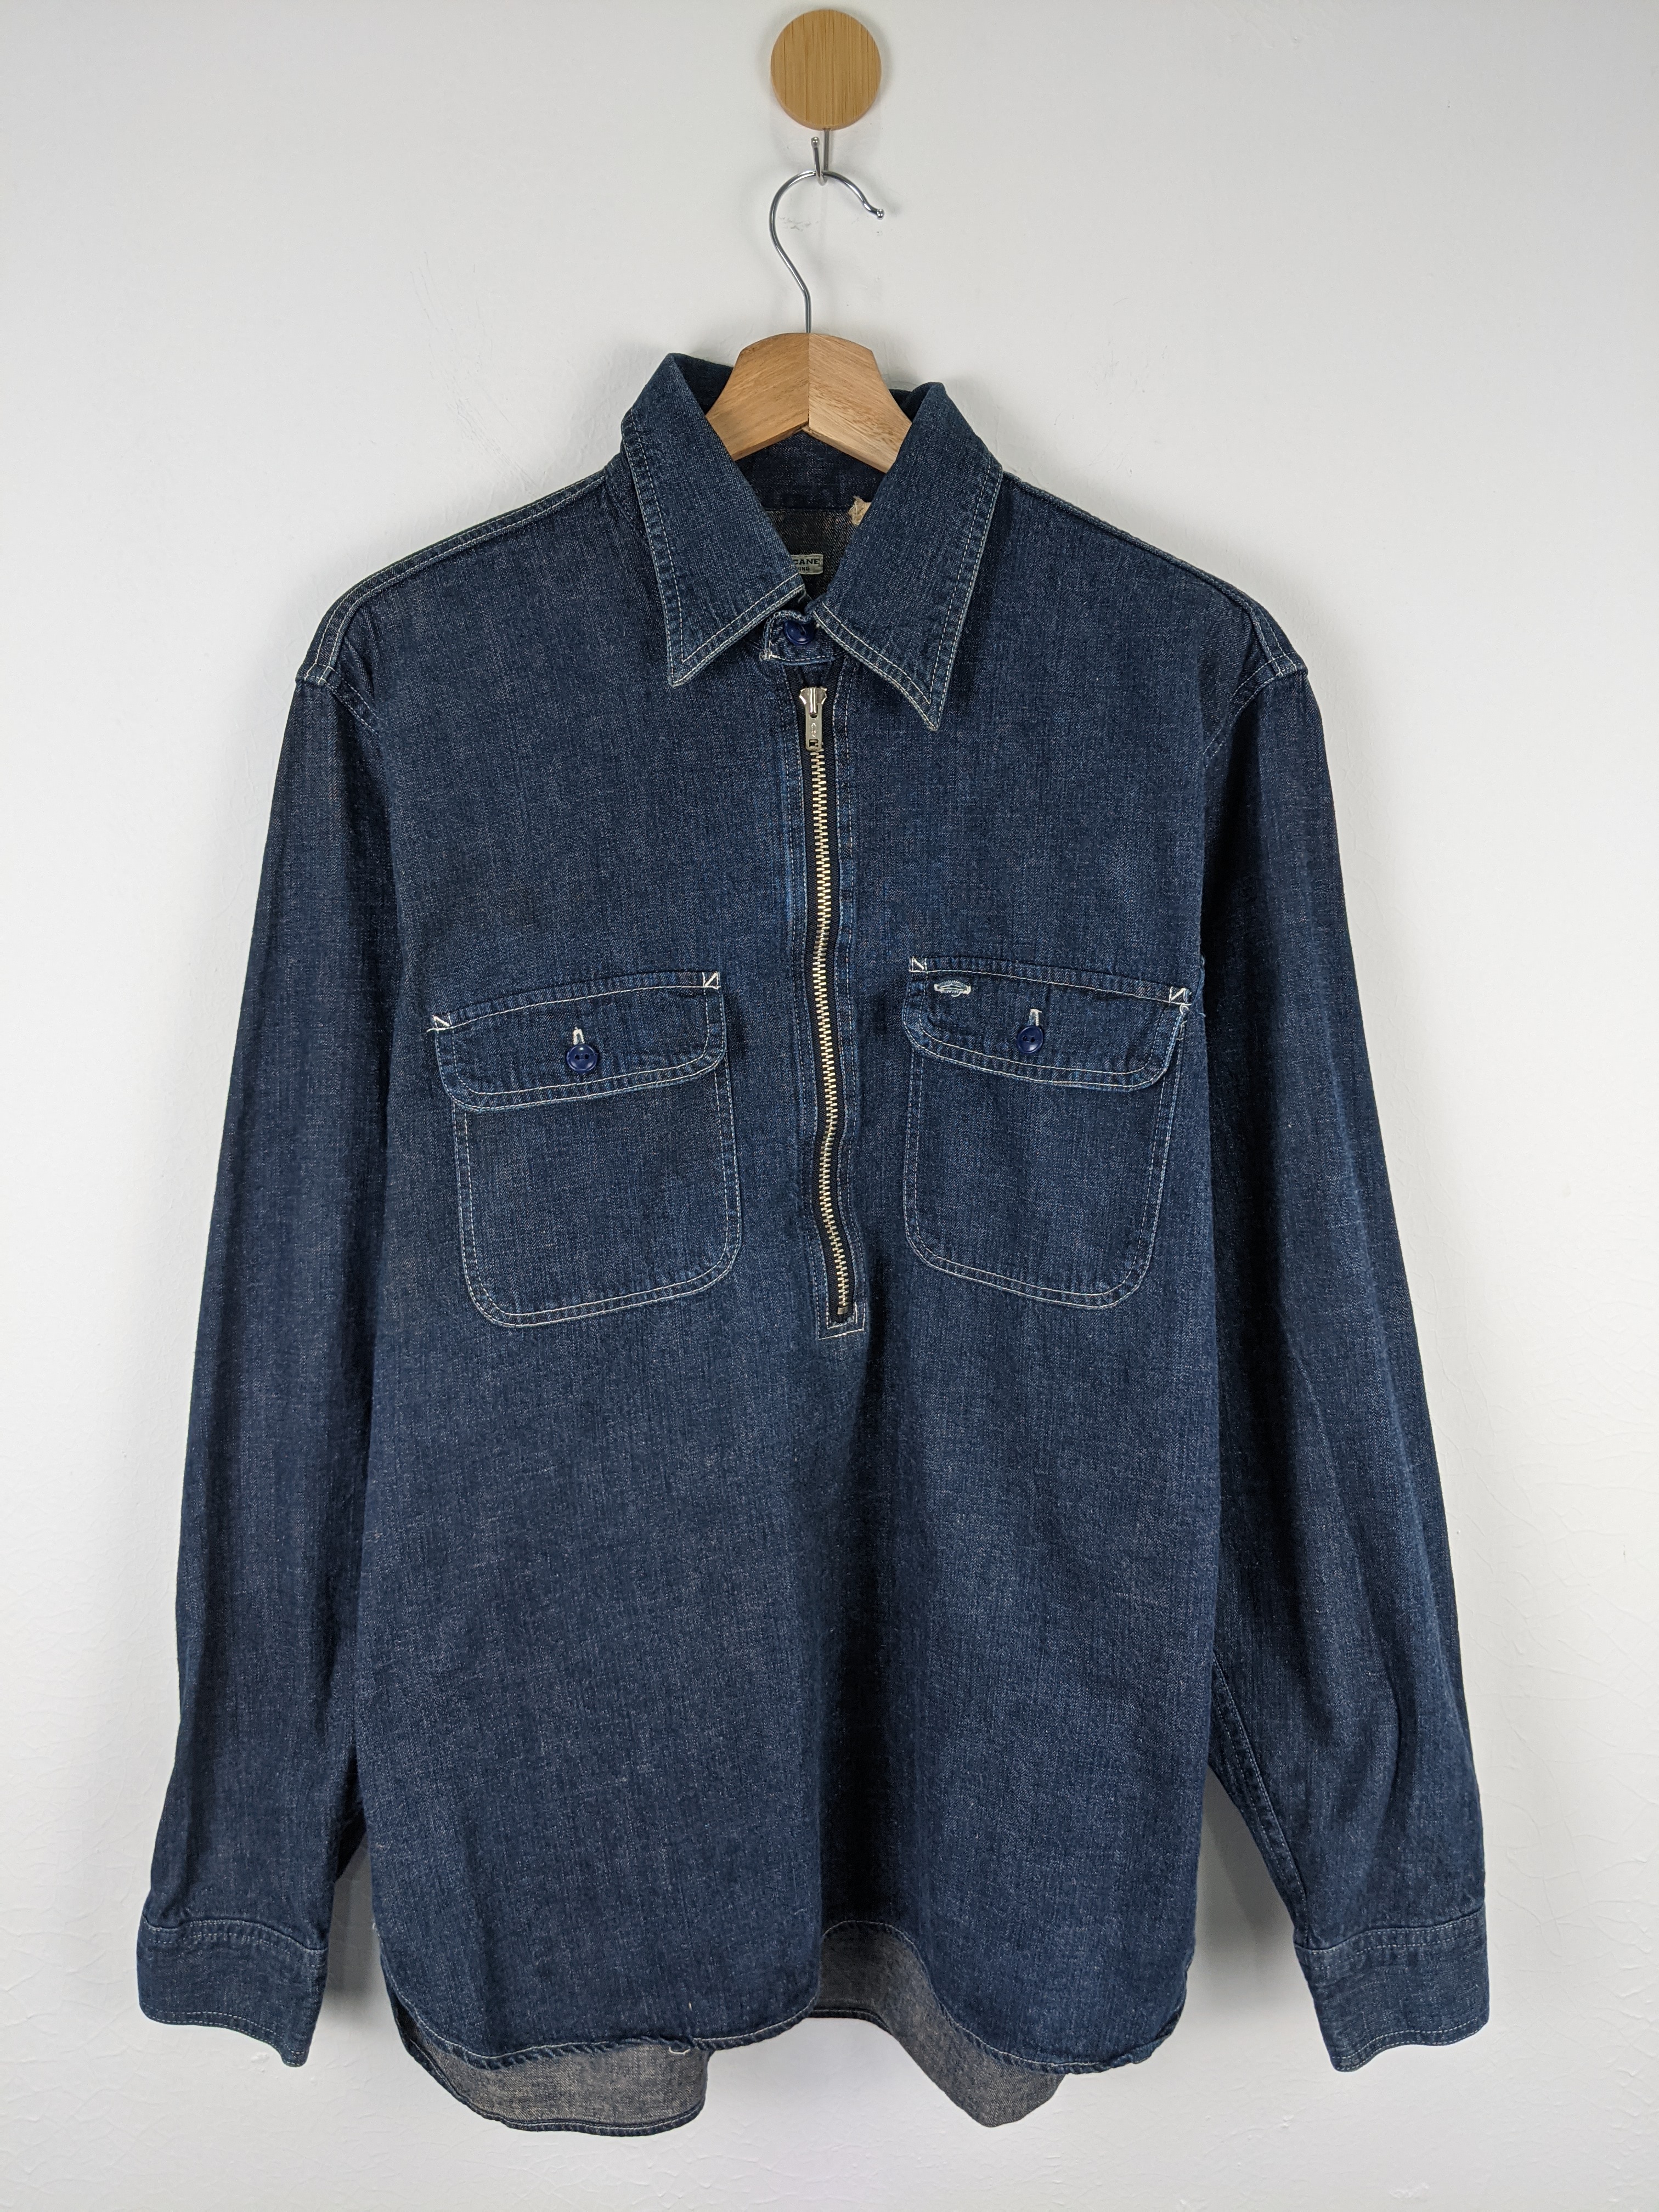 Sugar Cane - Sugarcane Toyo Half Zipper Denim Jeans Pocket Work Shirt